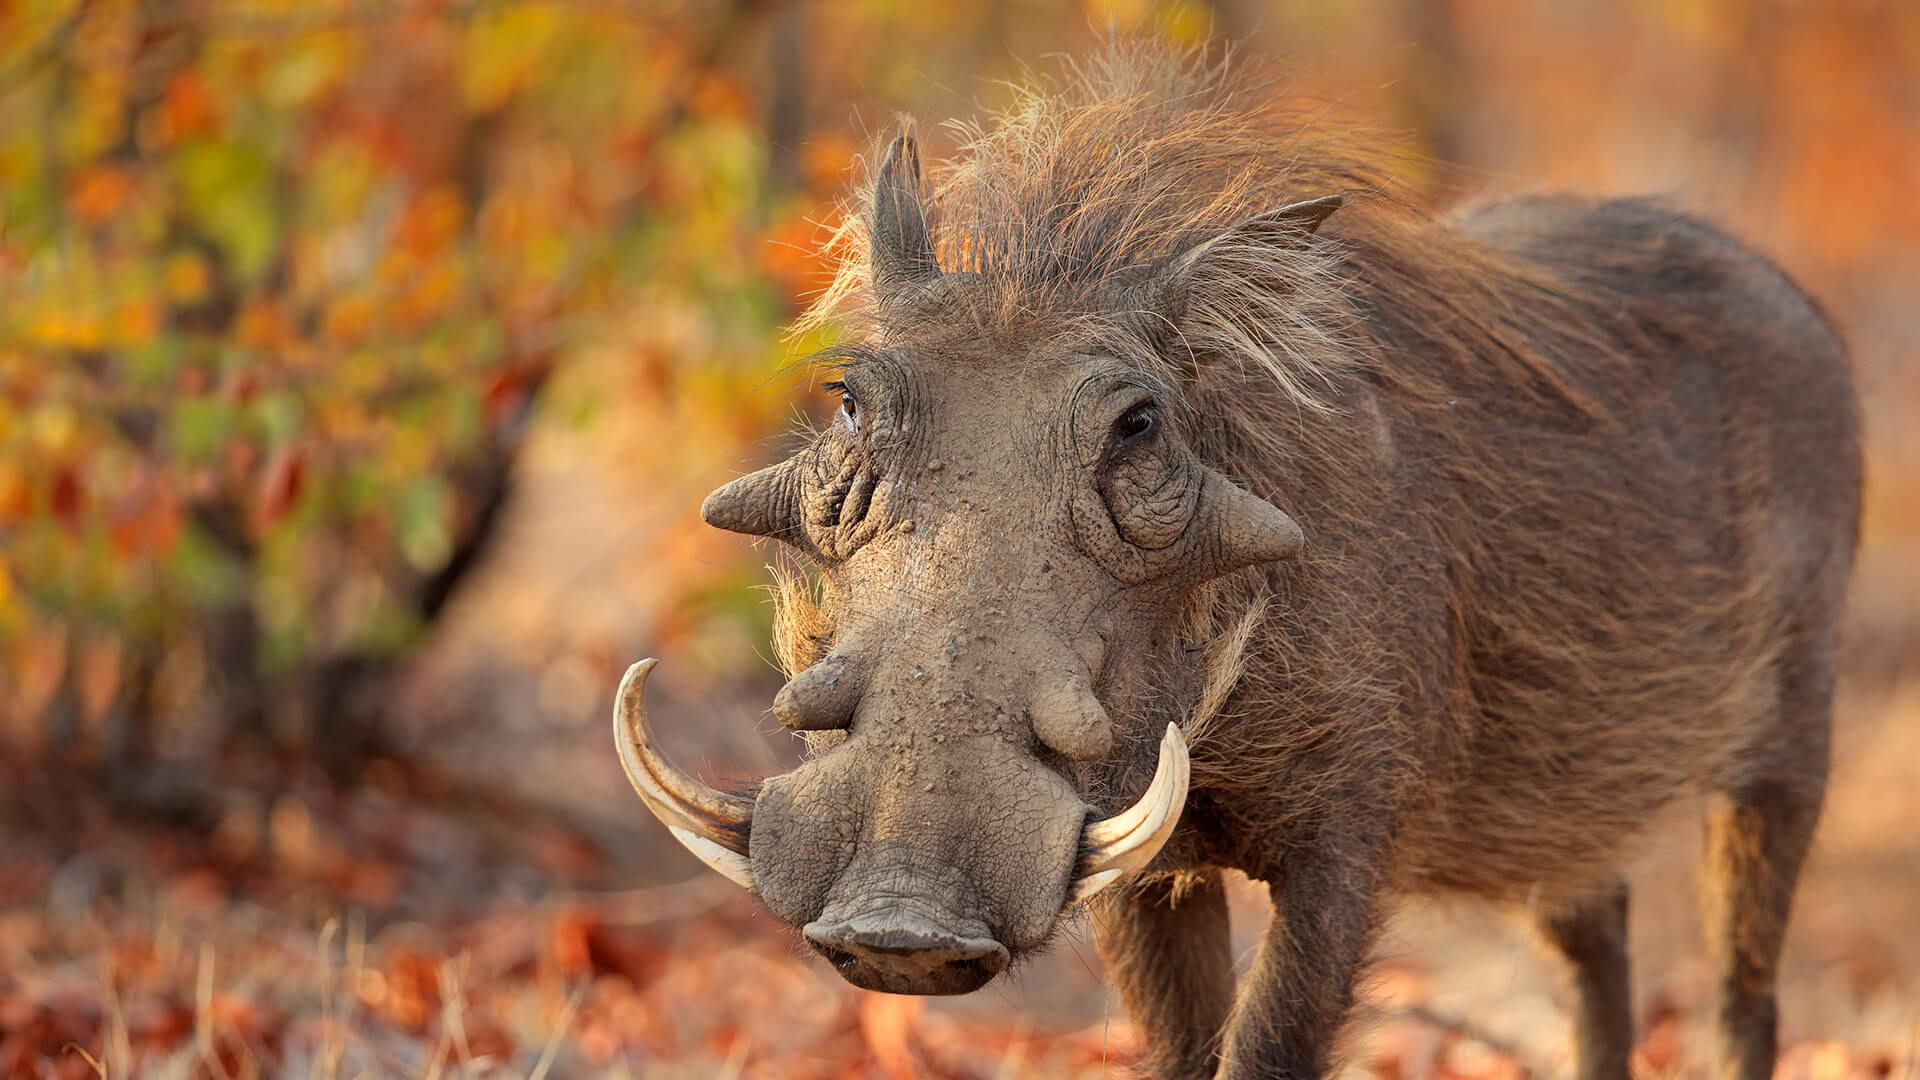 Warthog in African habitat